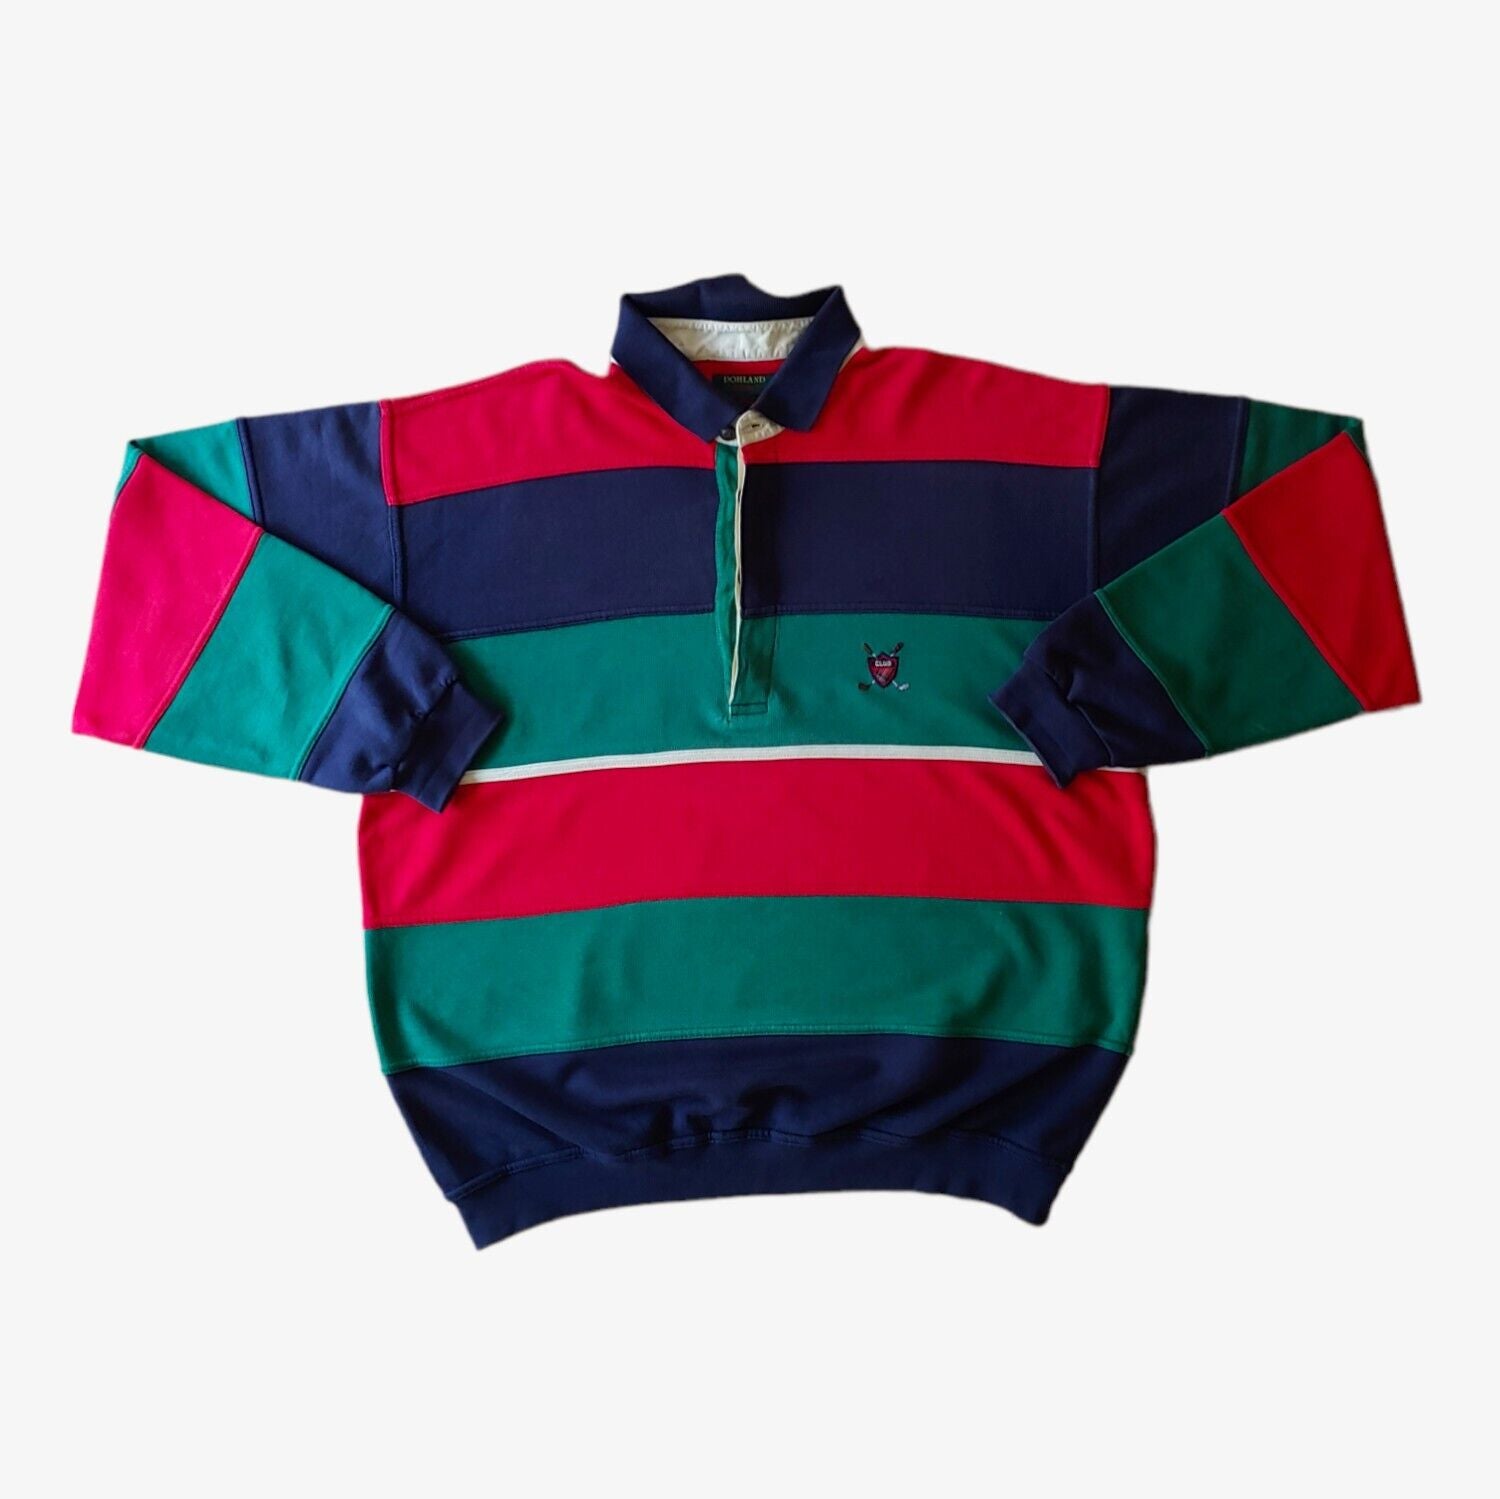 Vintage 90s Golf Club Colourful Striped Long Sleeve Rugby Shirt - Casspios Dream